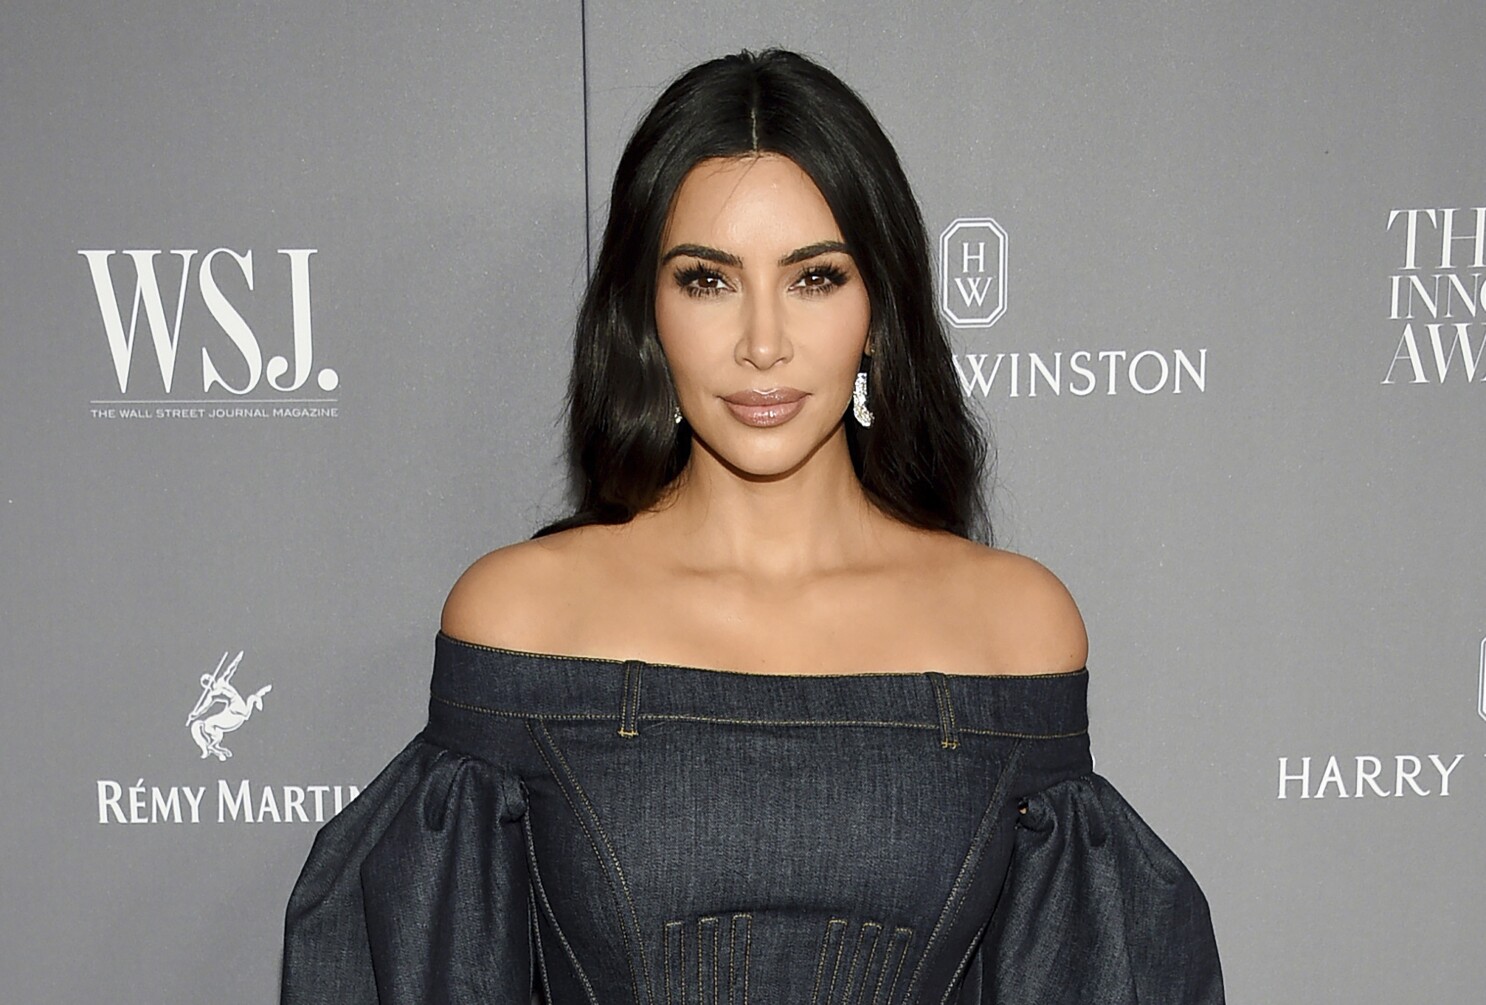 Kim Kardashian has gotten her butt reduced